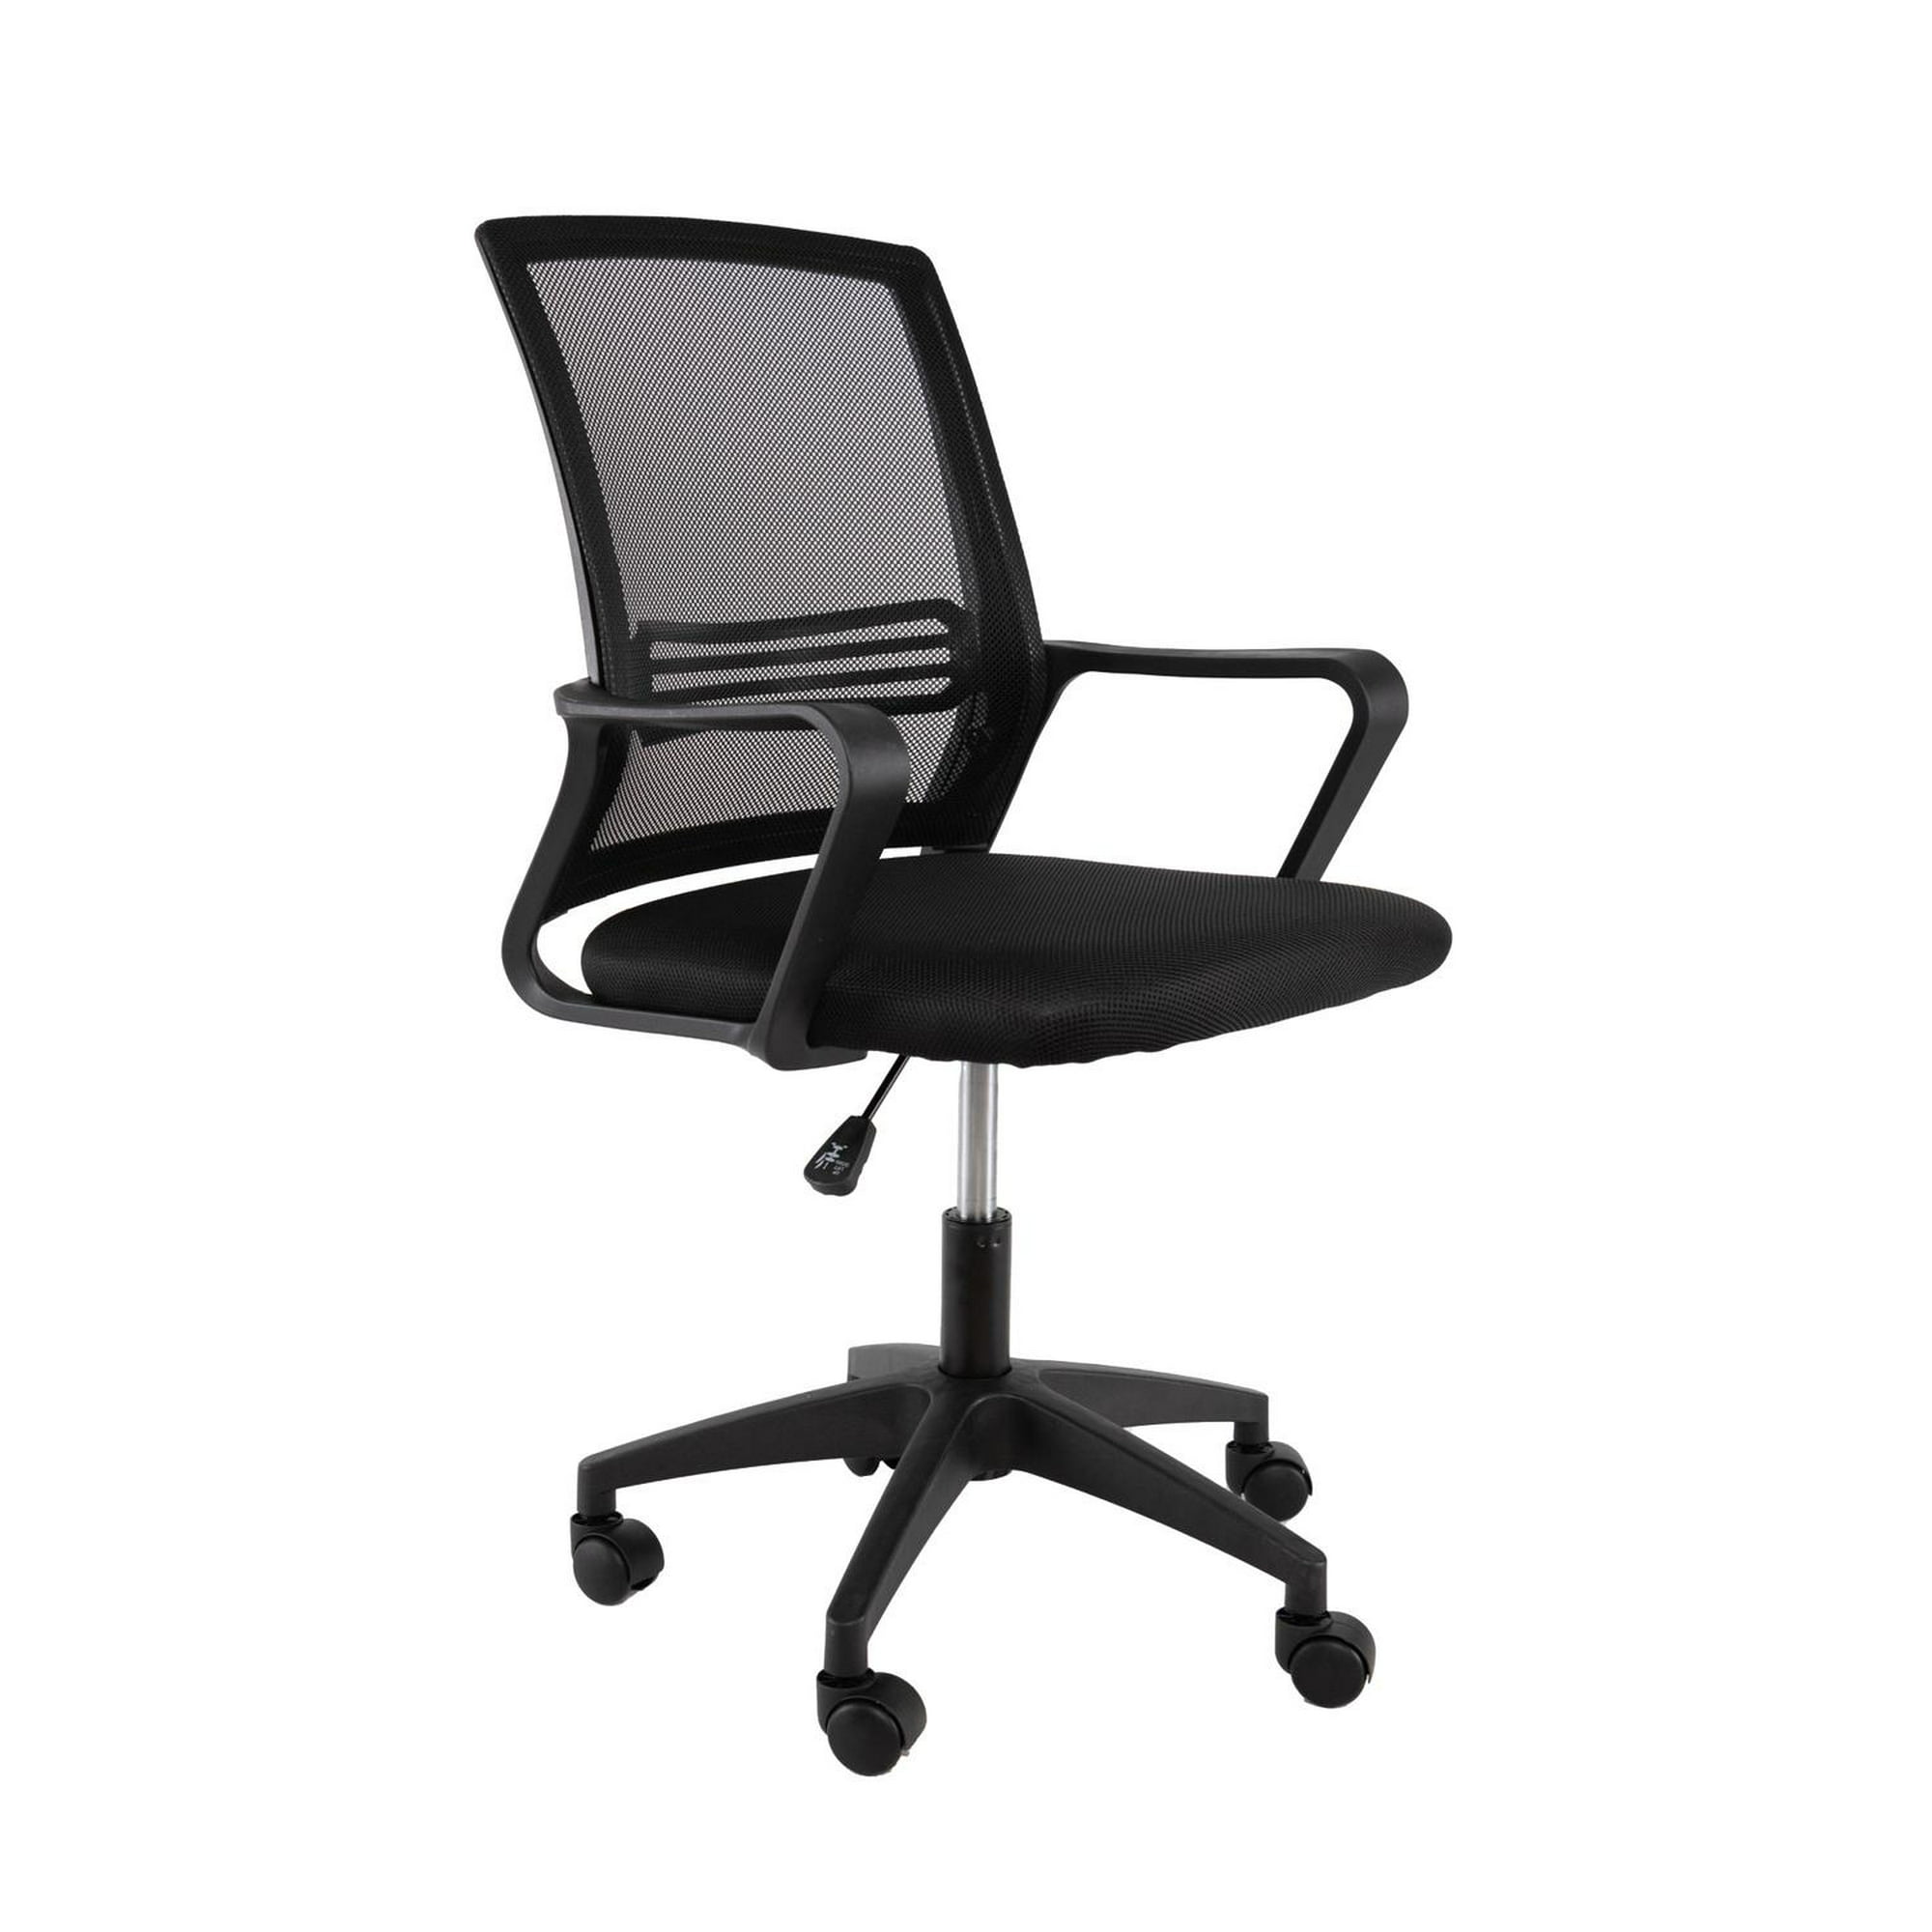 Silla técnica PU negra - 5 tacos - altura de silla 53 - 78 cm - Equipo de  laboratorio